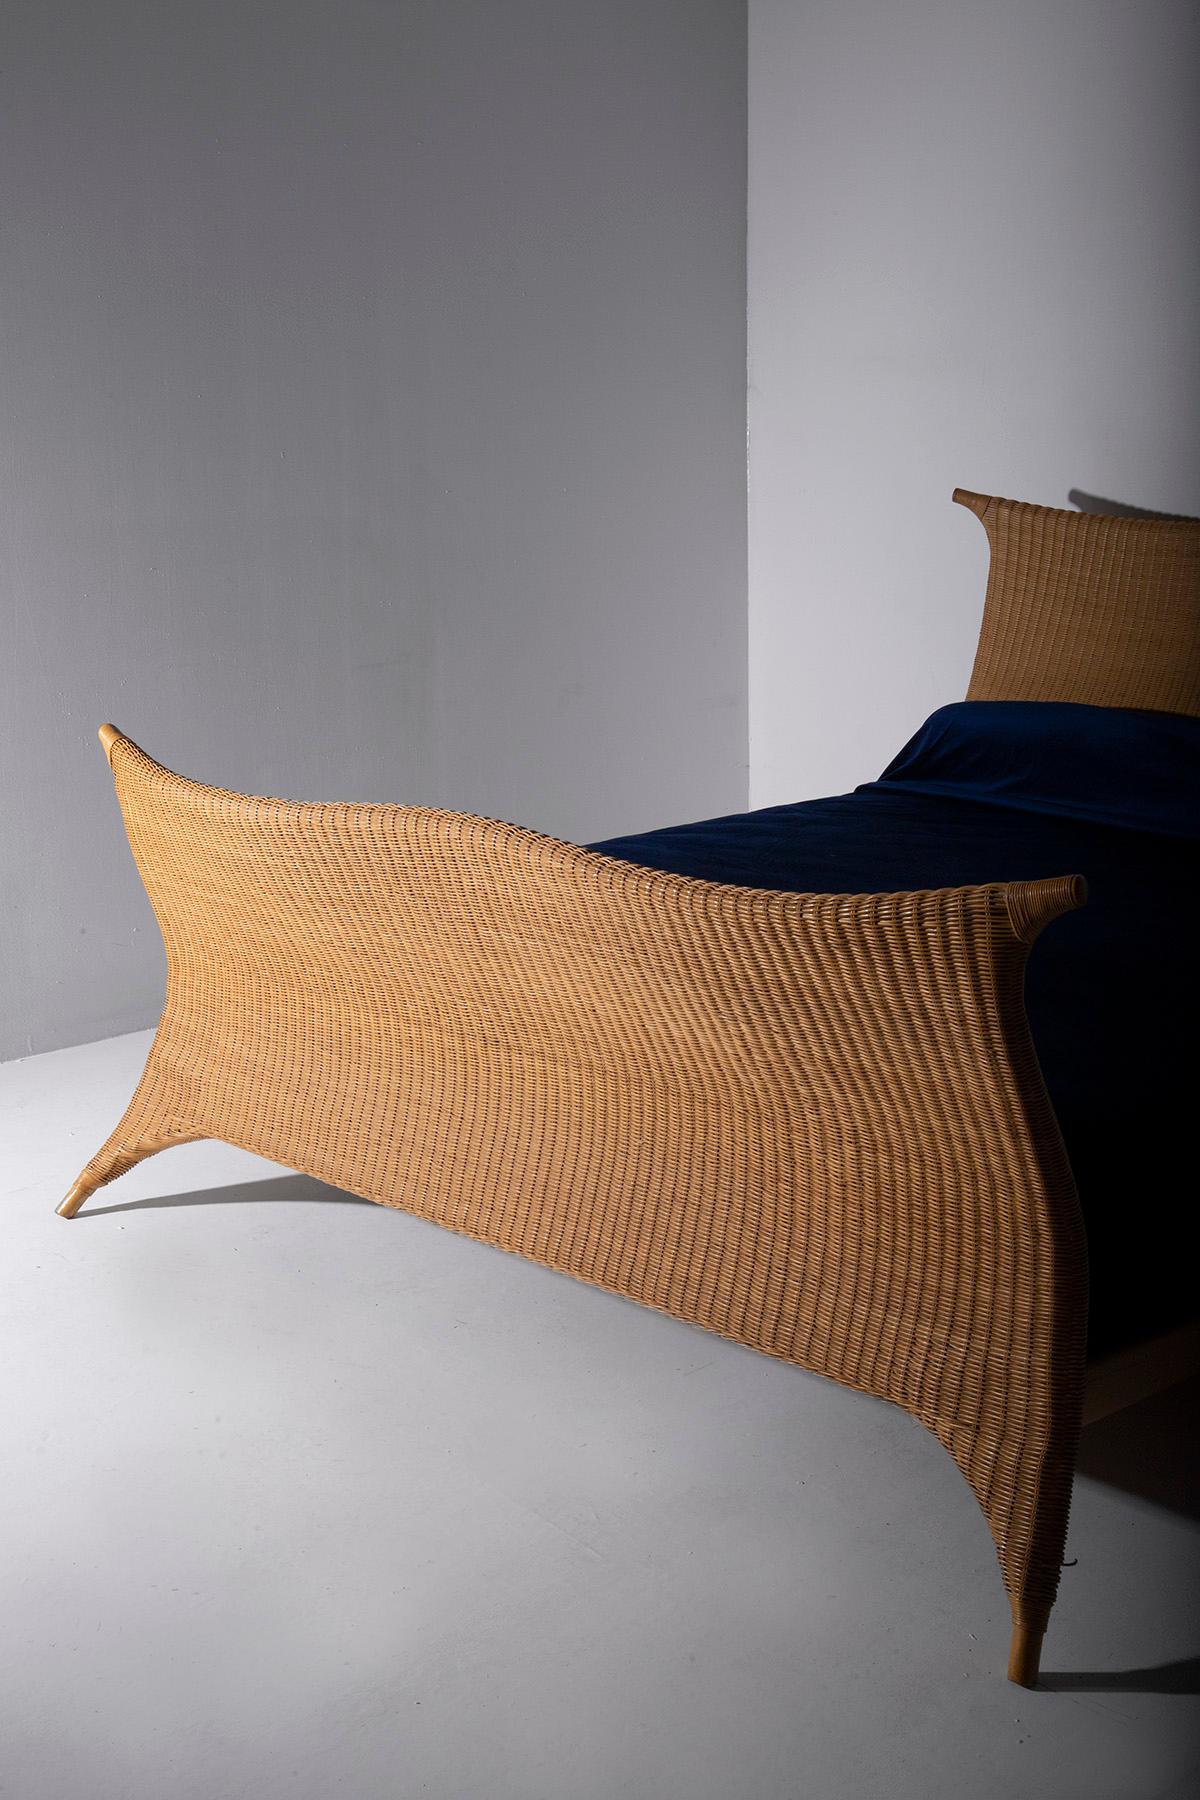 Rattan Italian rattan bed by PierAntonio Bonacina, with label For Sale